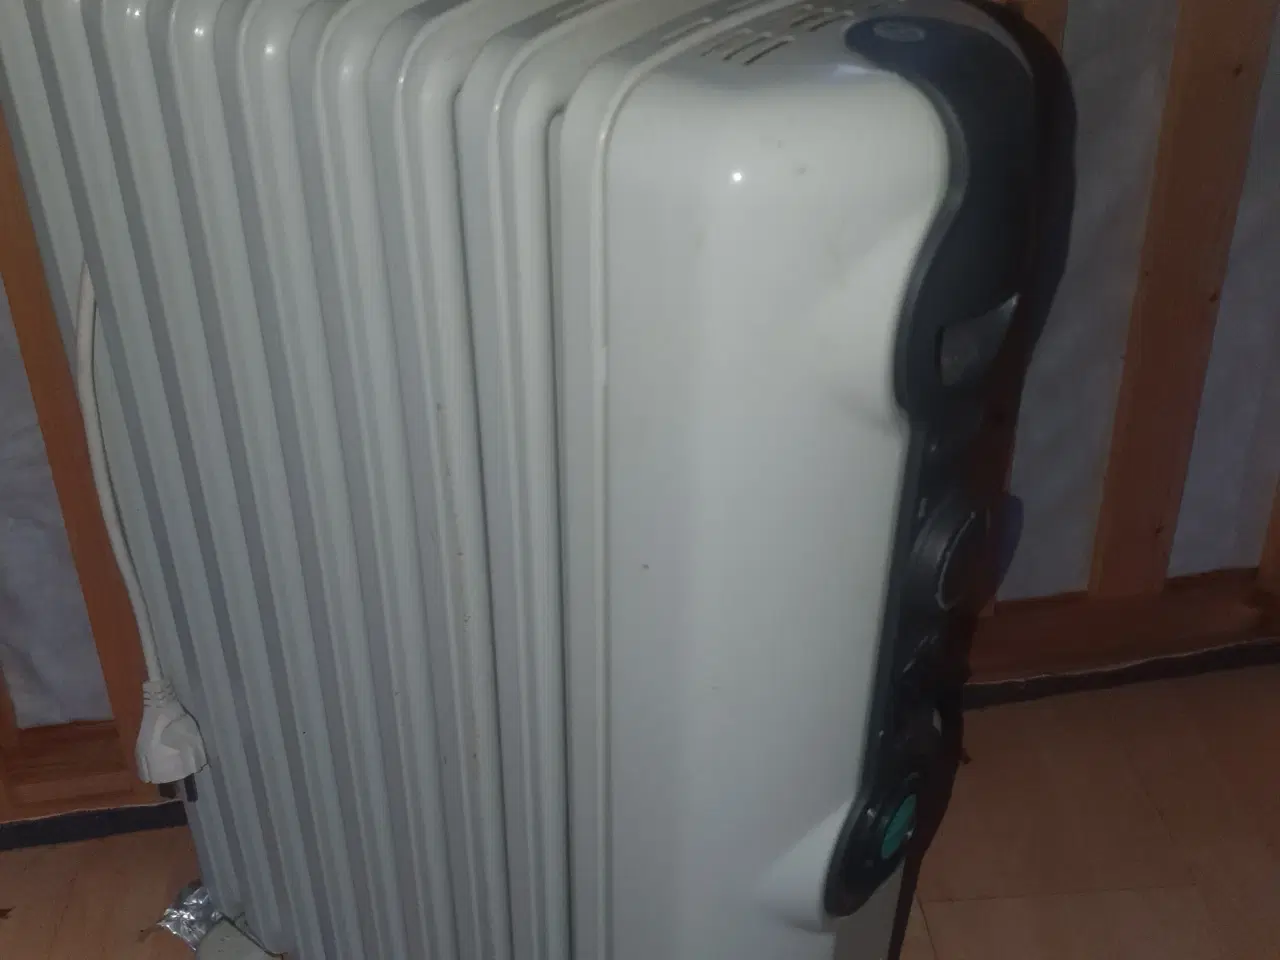 Billede 3 - El radiator